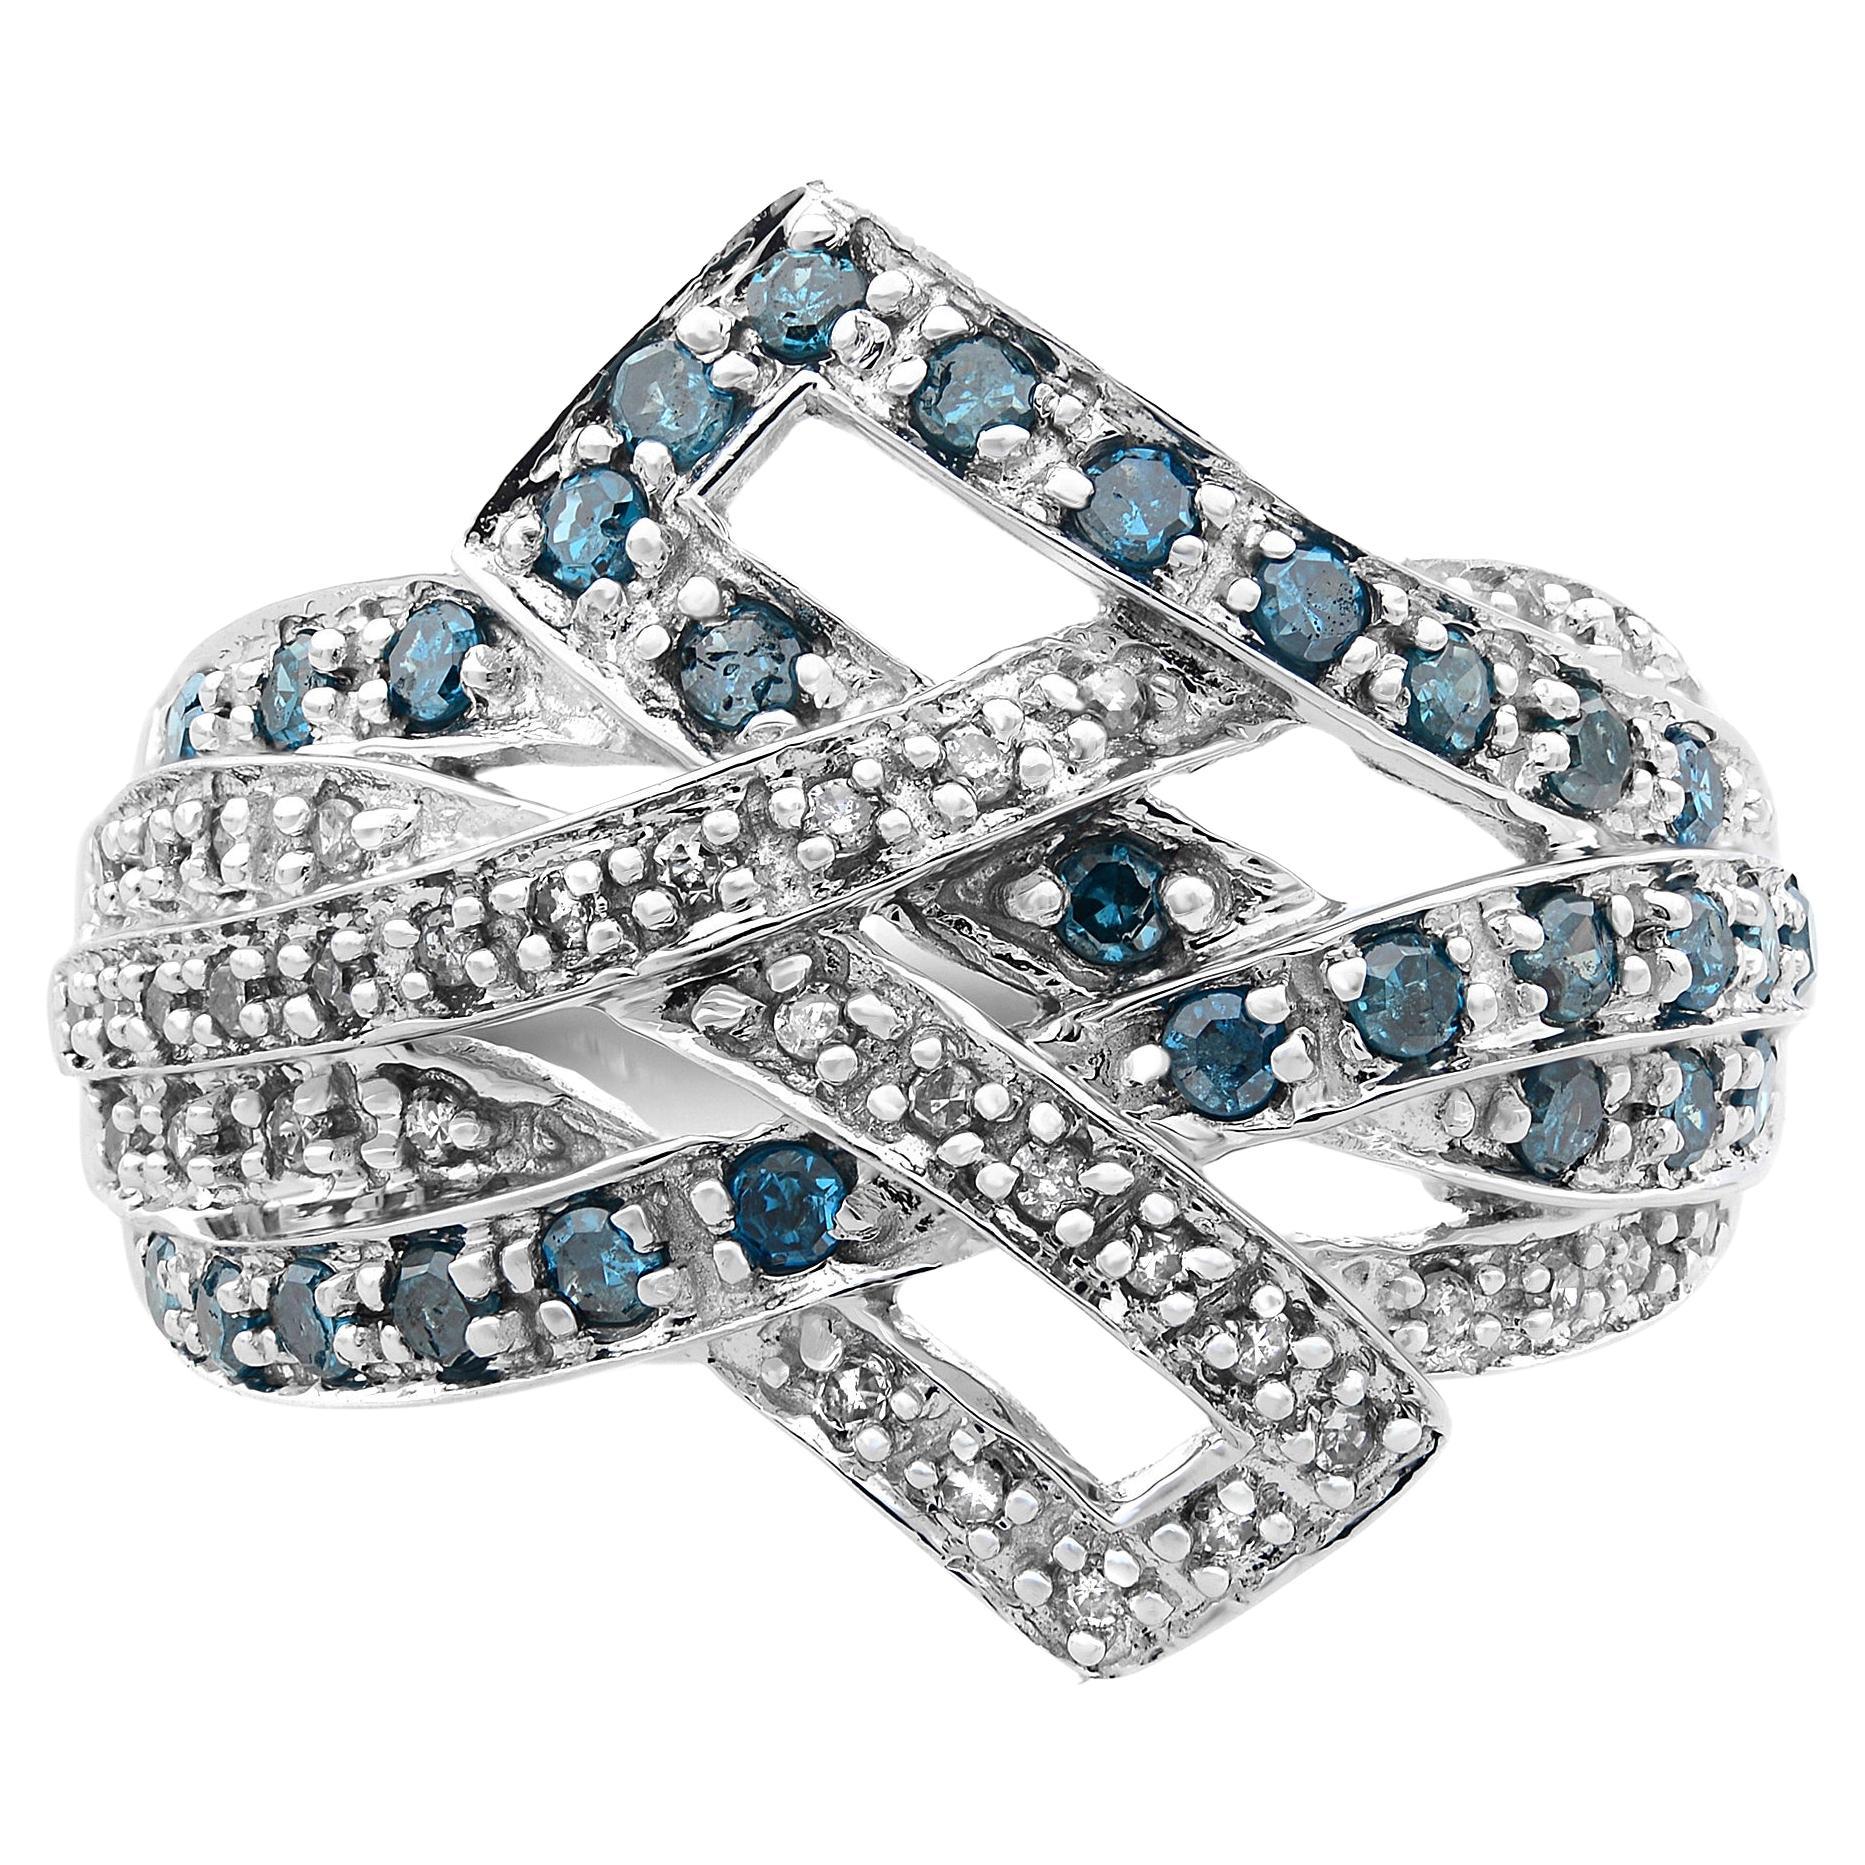 Rachel Koen Blue and White Diamonds Cocktail Ring 10K White Gold 1.00cttw For Sale